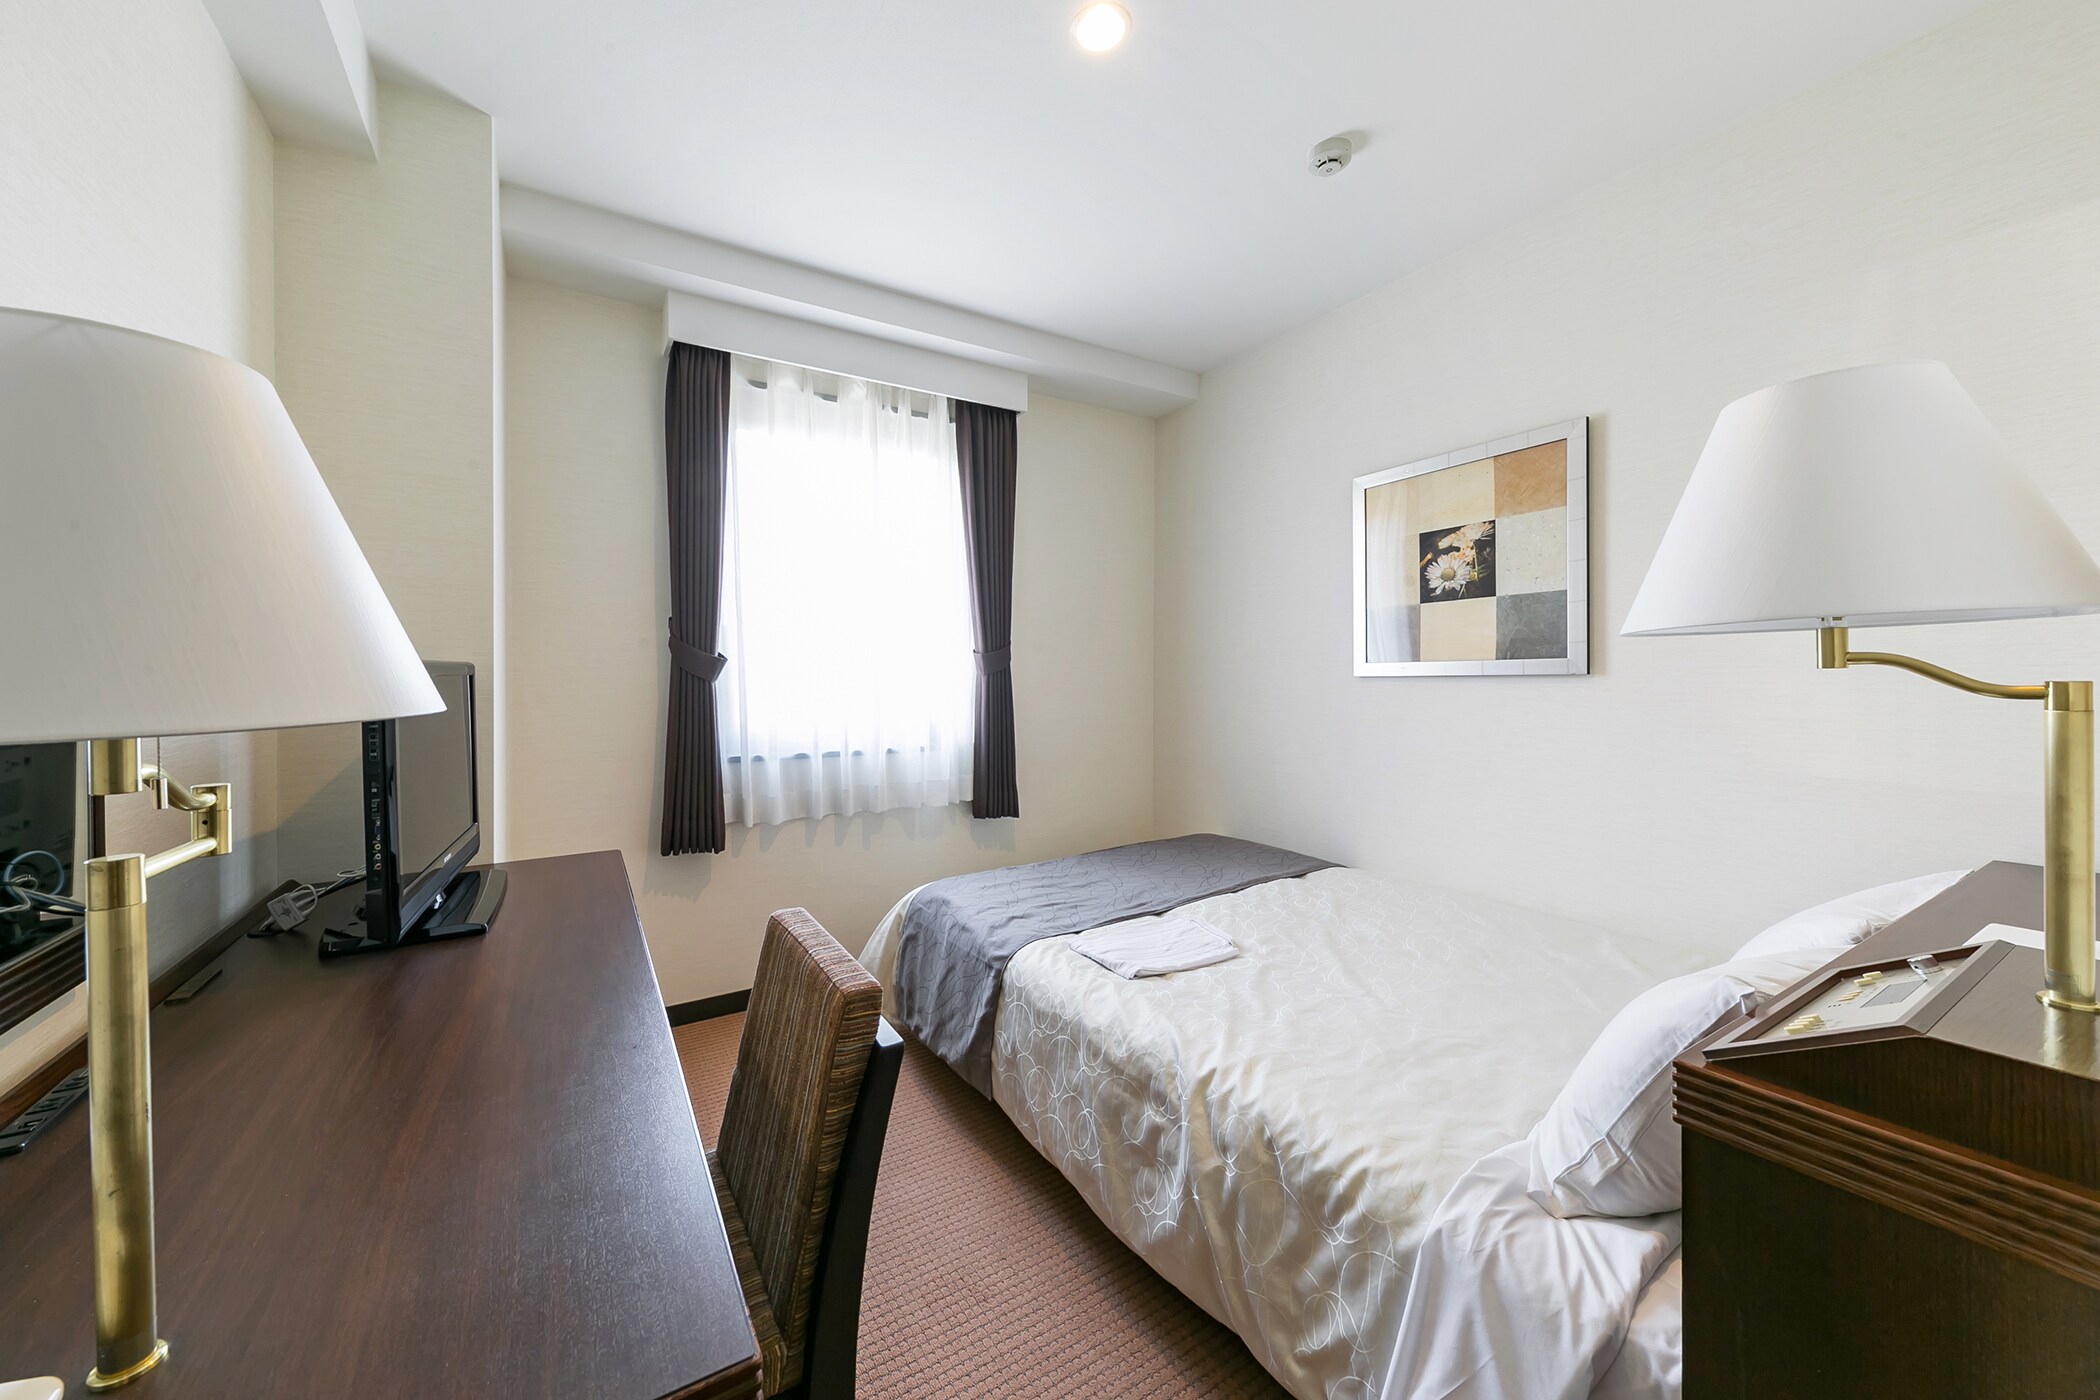 Single room (semi-double room) 15.1 sqm / 140 cm wide bed